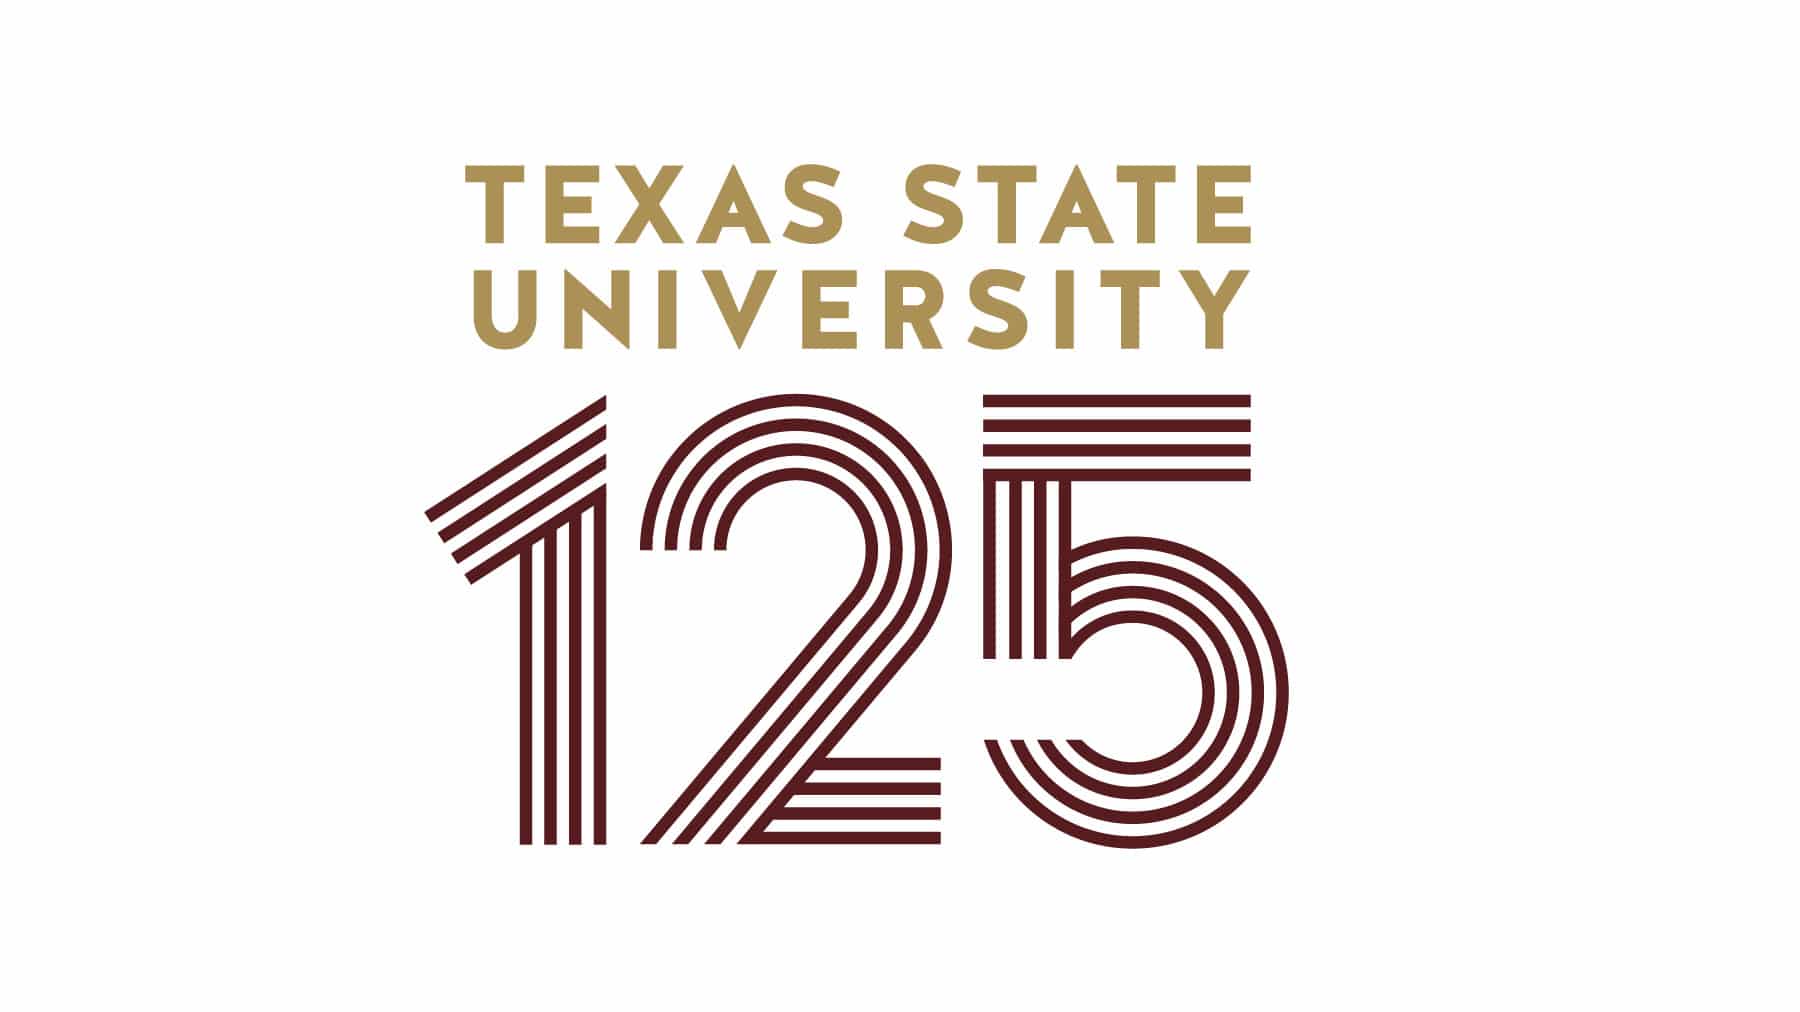 Texas State University 125